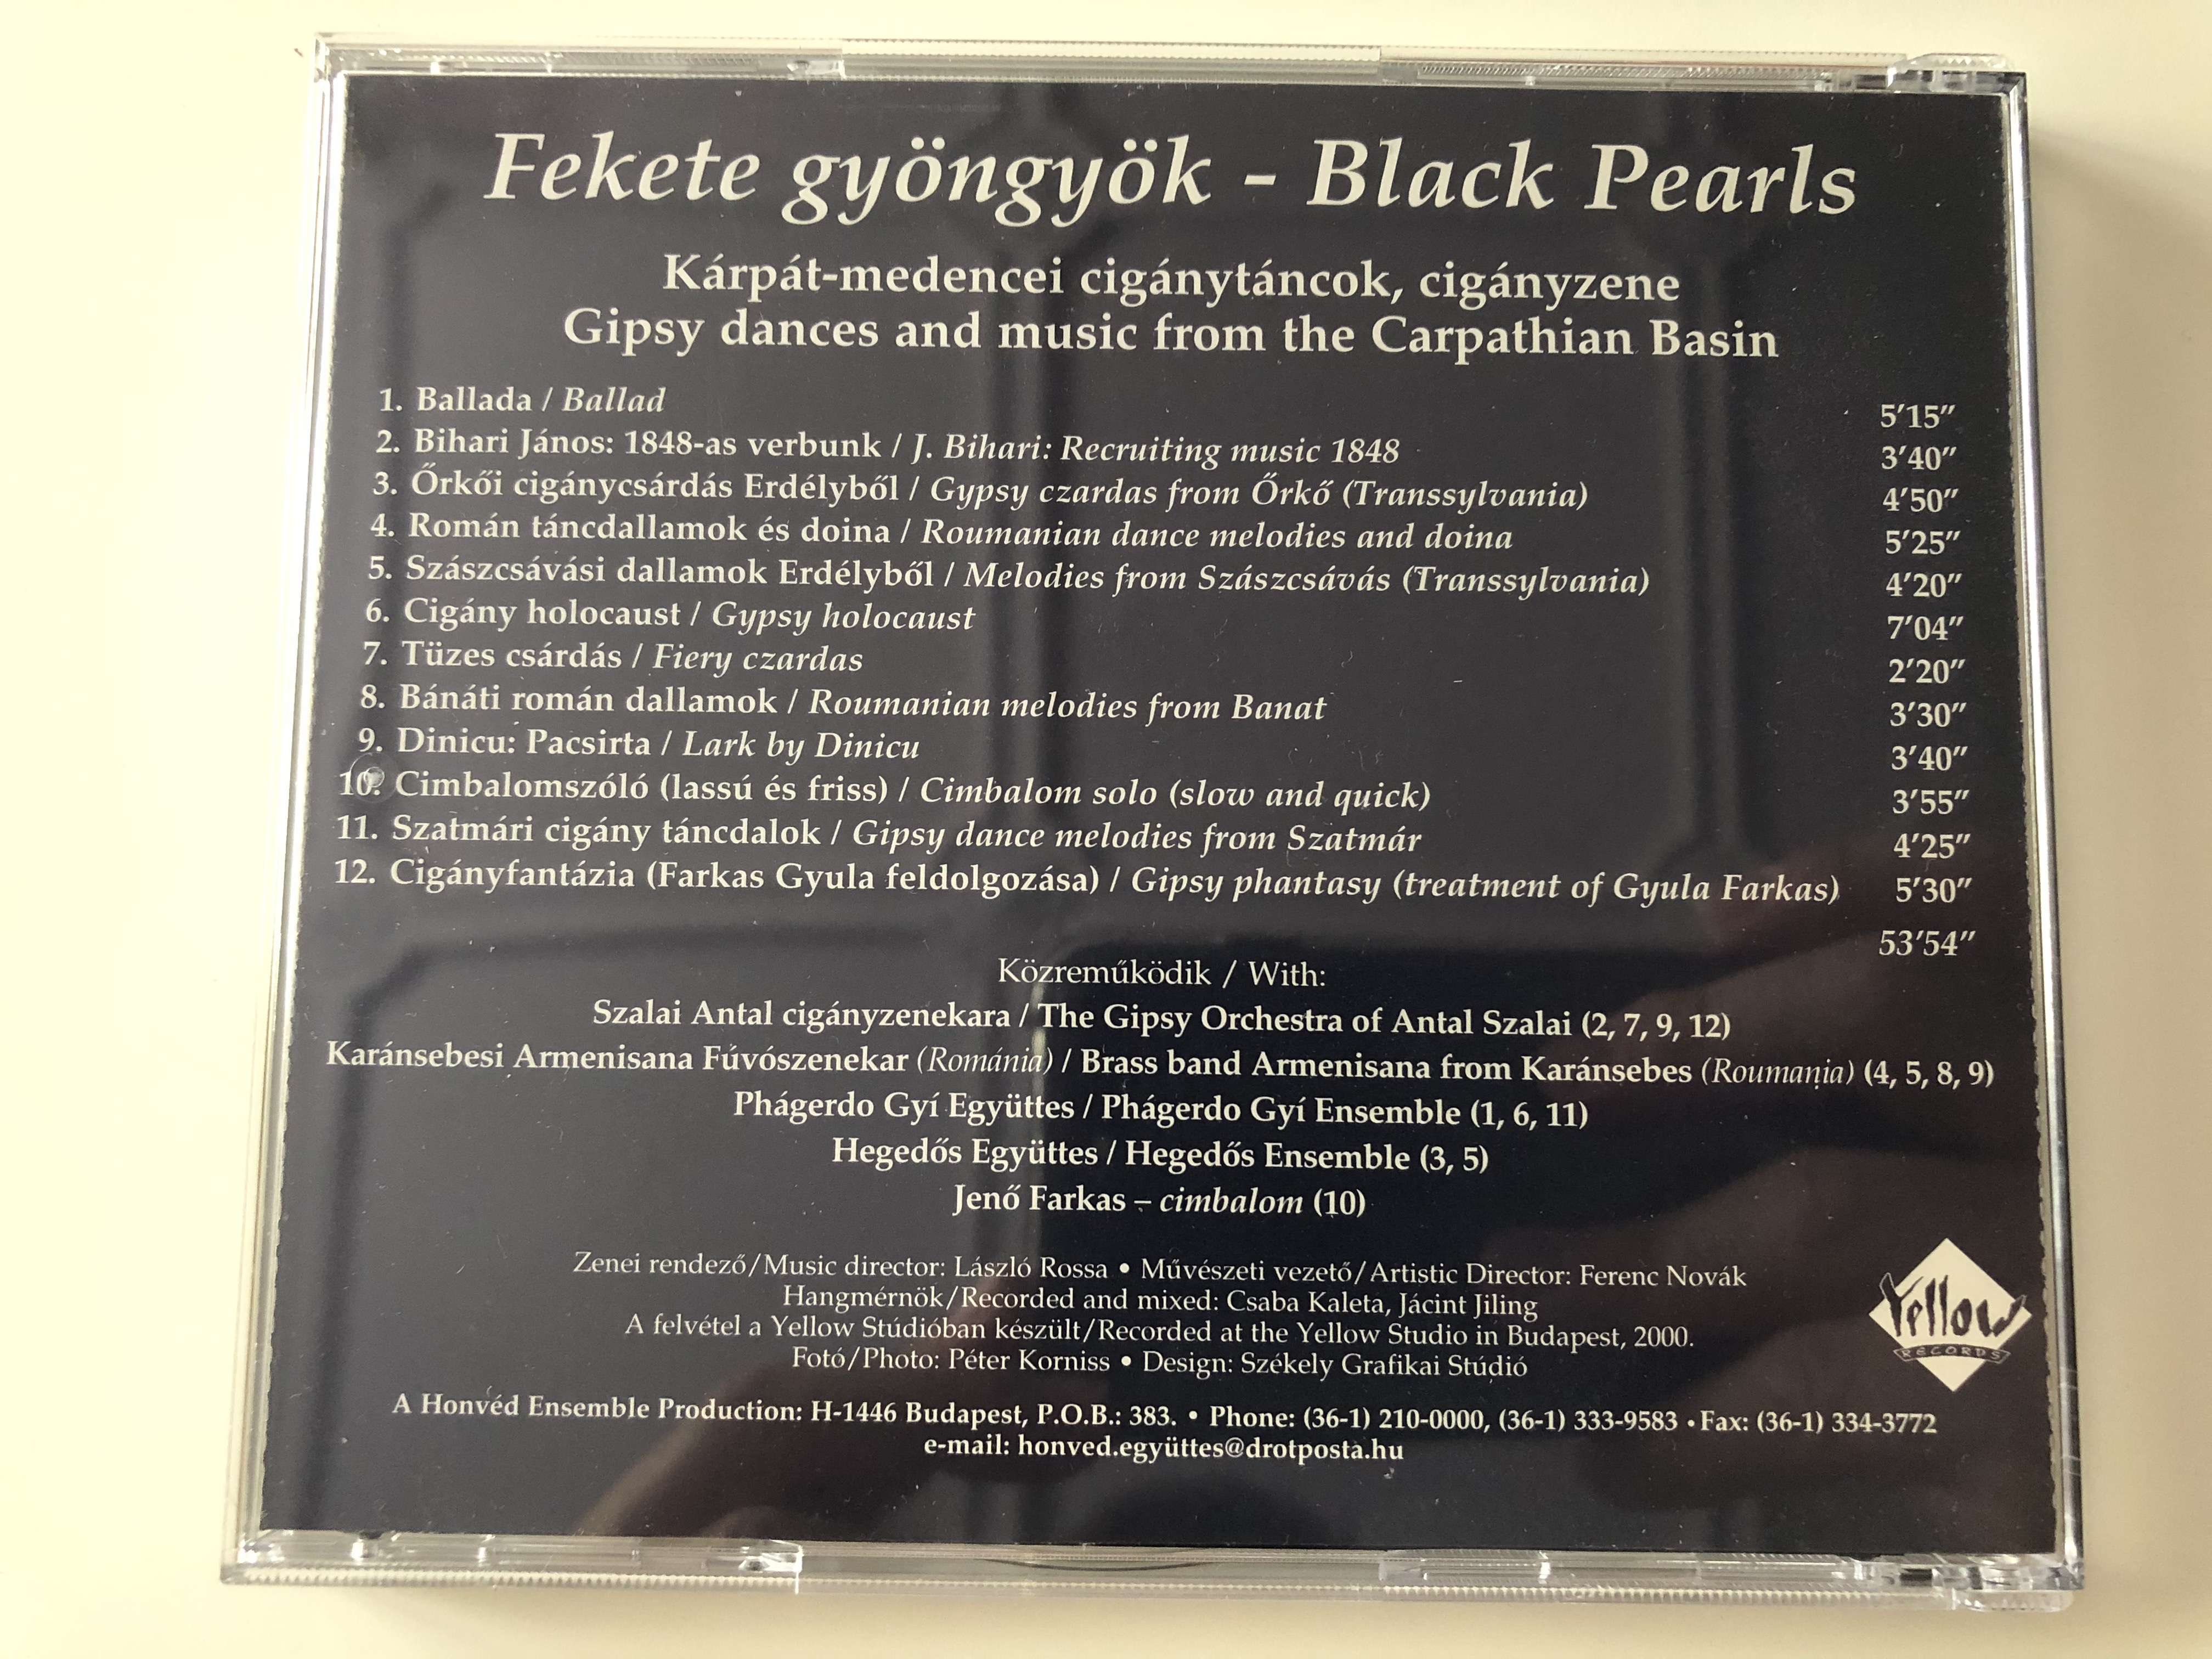 fekete-gy-ngy-k-black-pearls-honv-d-egy-ttes-audio-cd-2001-yrcd-2001-01-4-.jpg